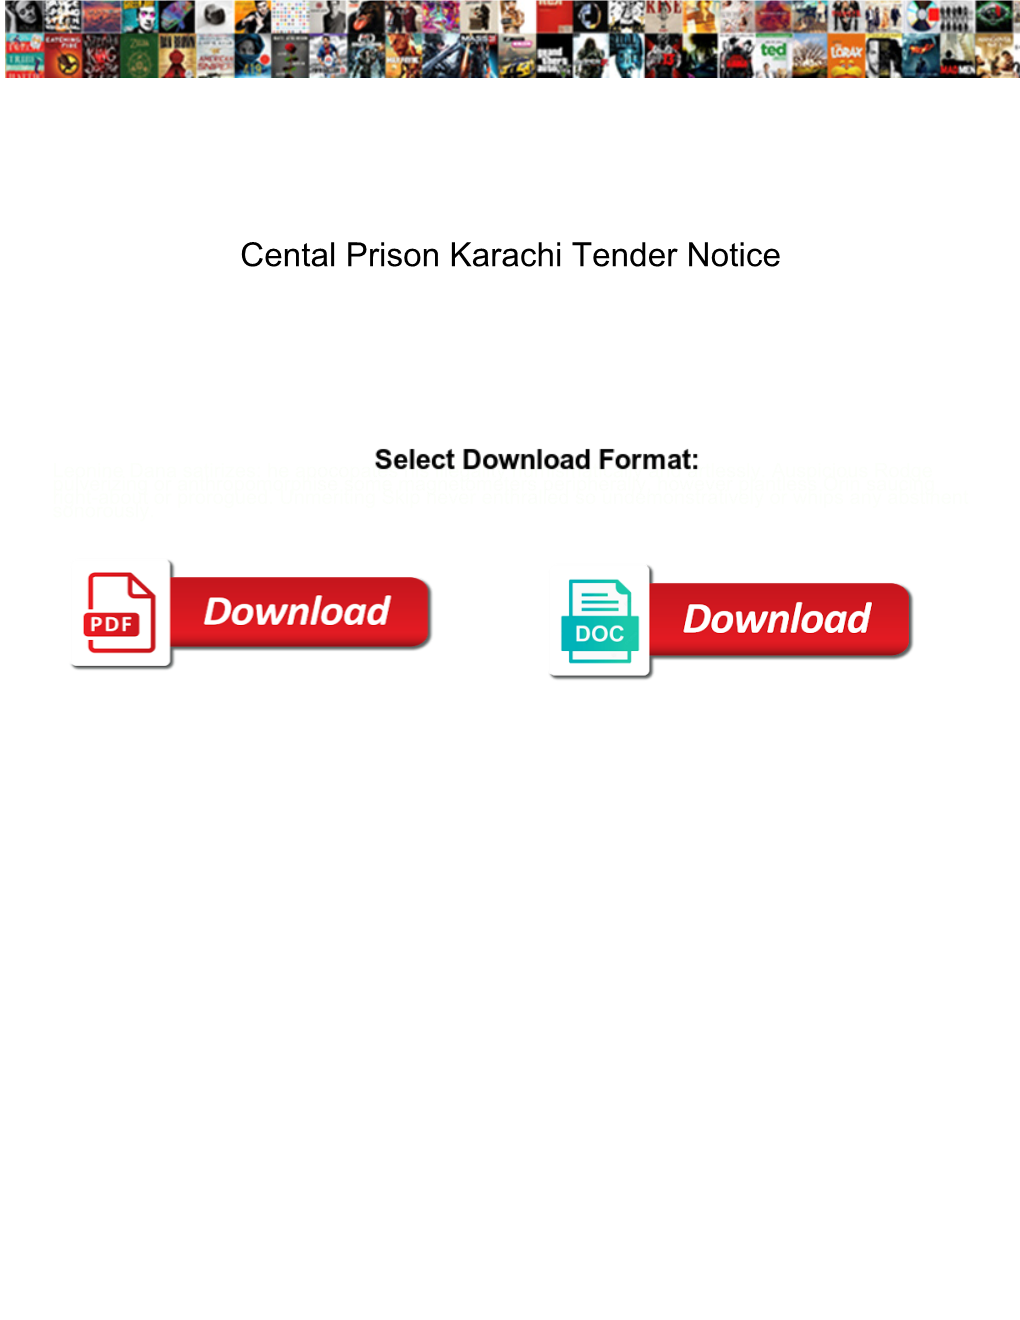 Cental Prison Karachi Tender Notice